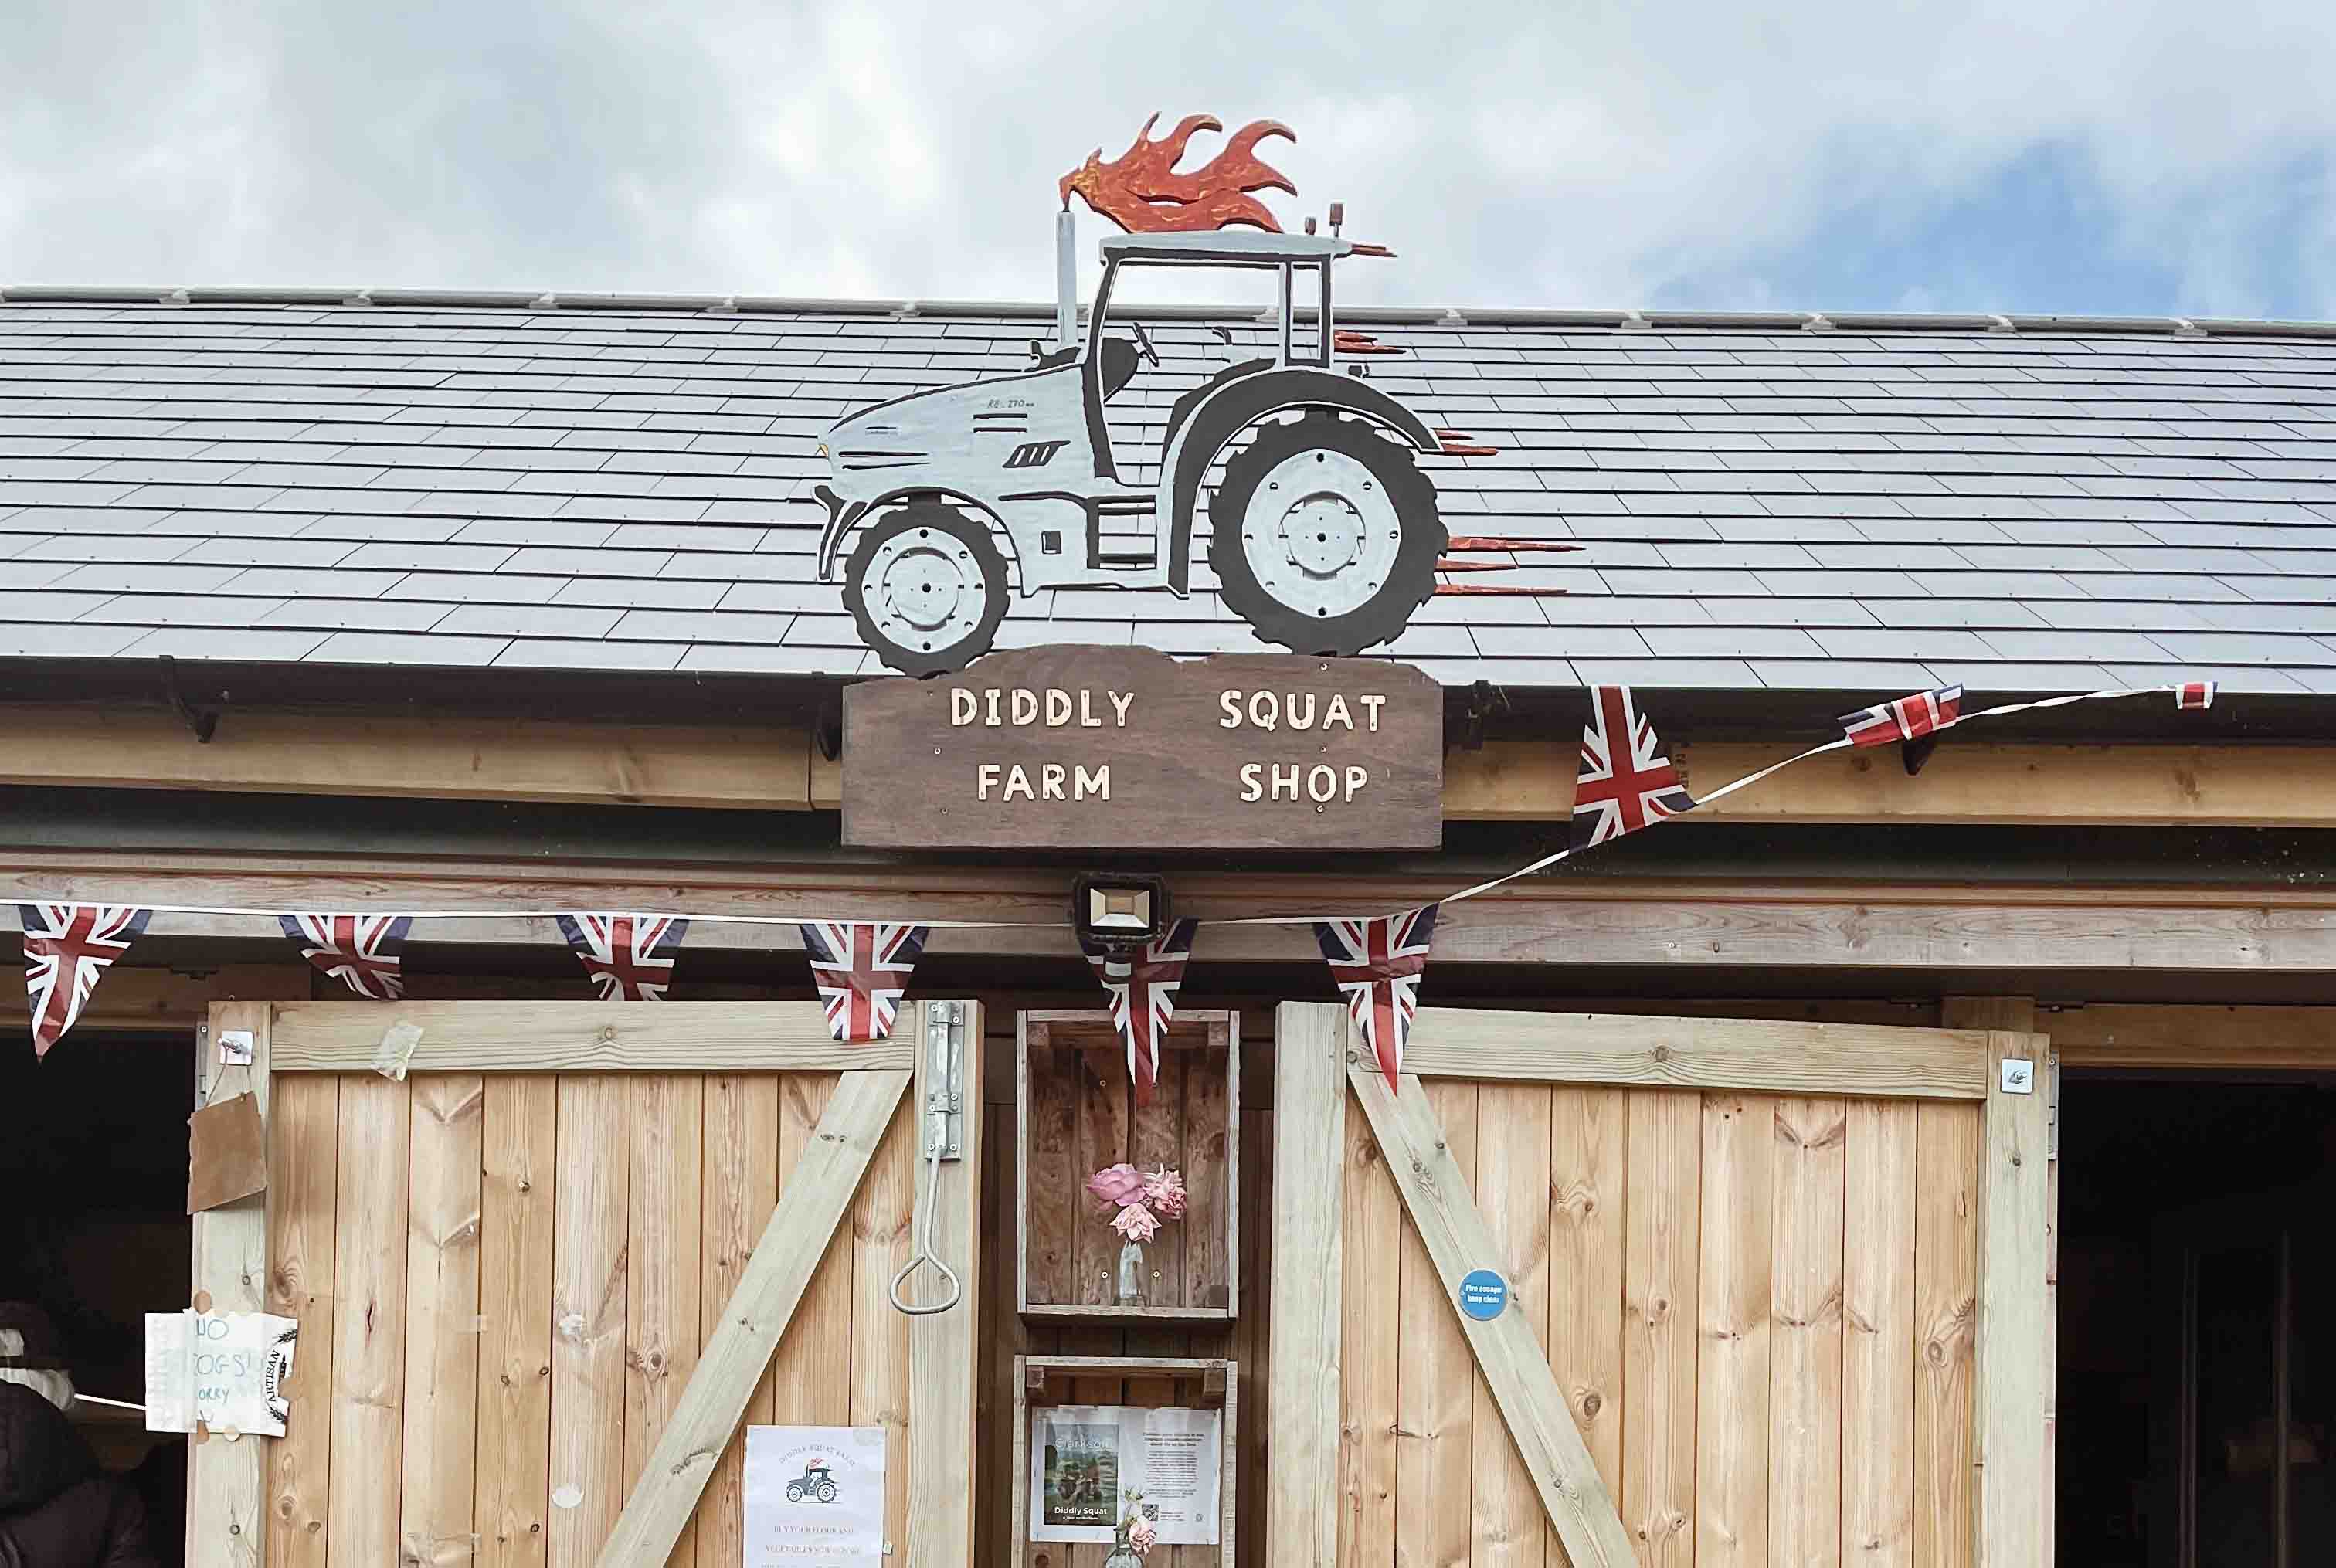 A visit to Jeremy Clarkson's Diddly Squat Farm Shop